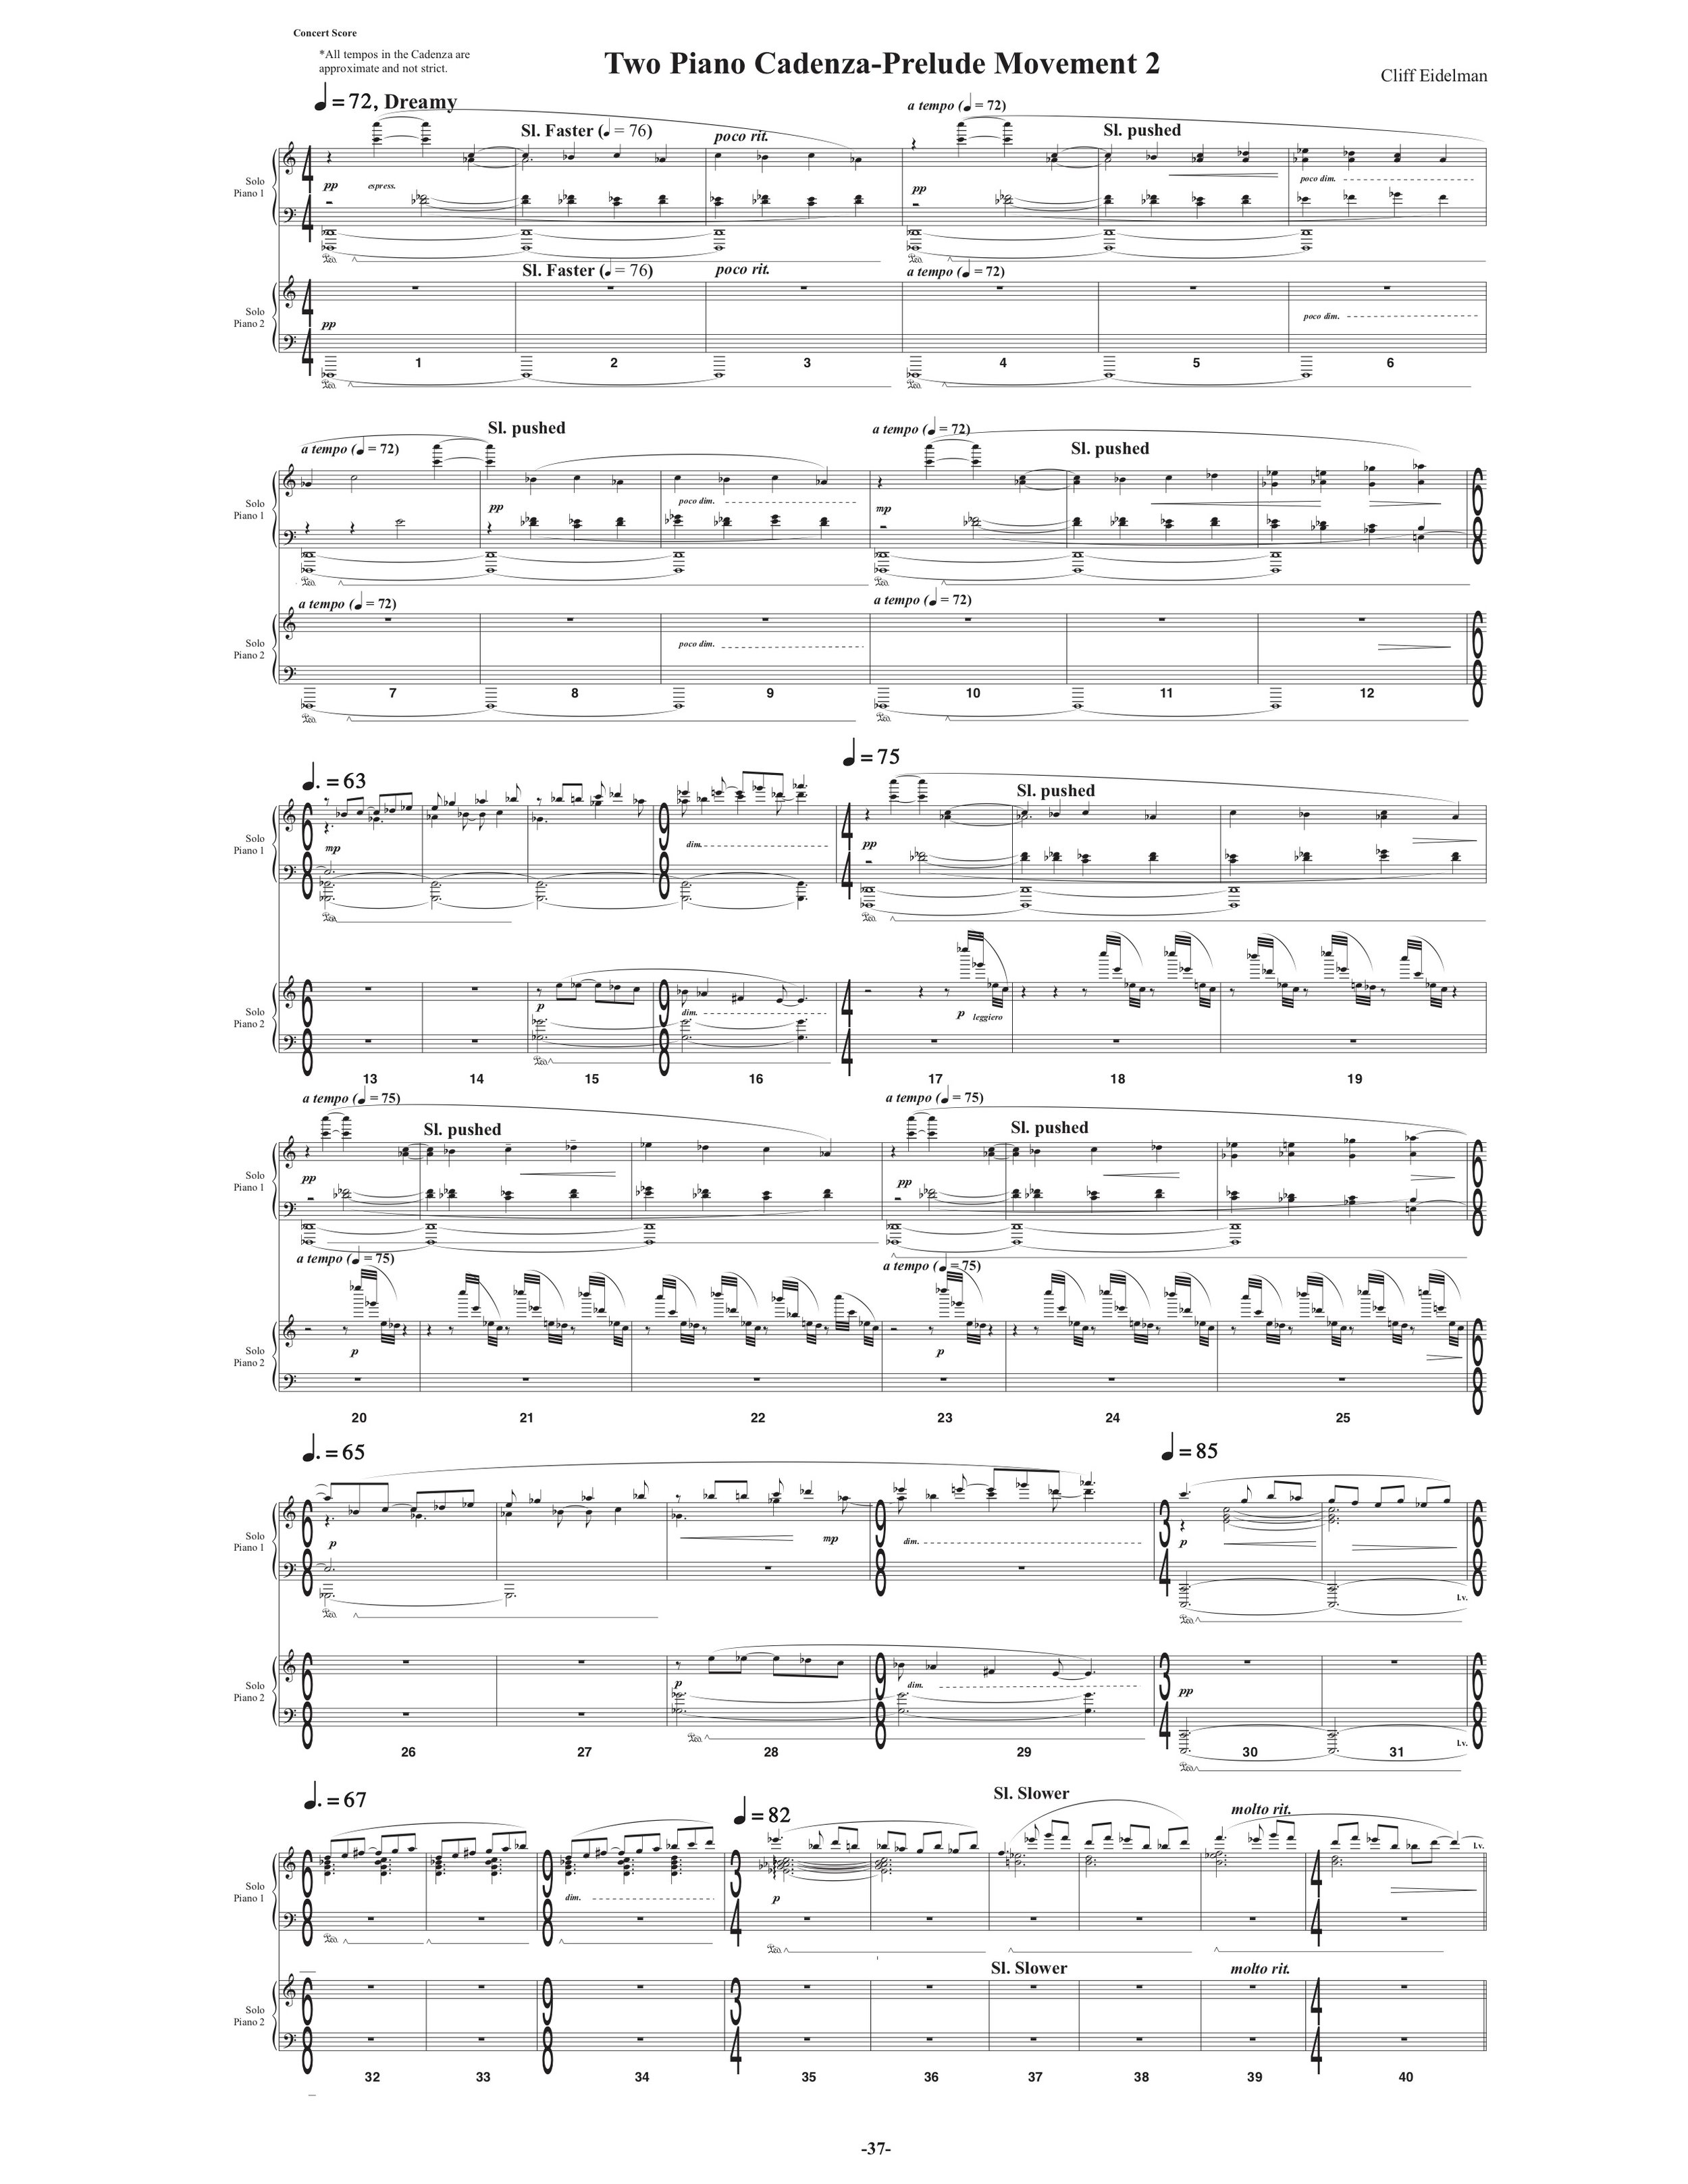 Symphony_Orch & 2 Pianos p42.jpg